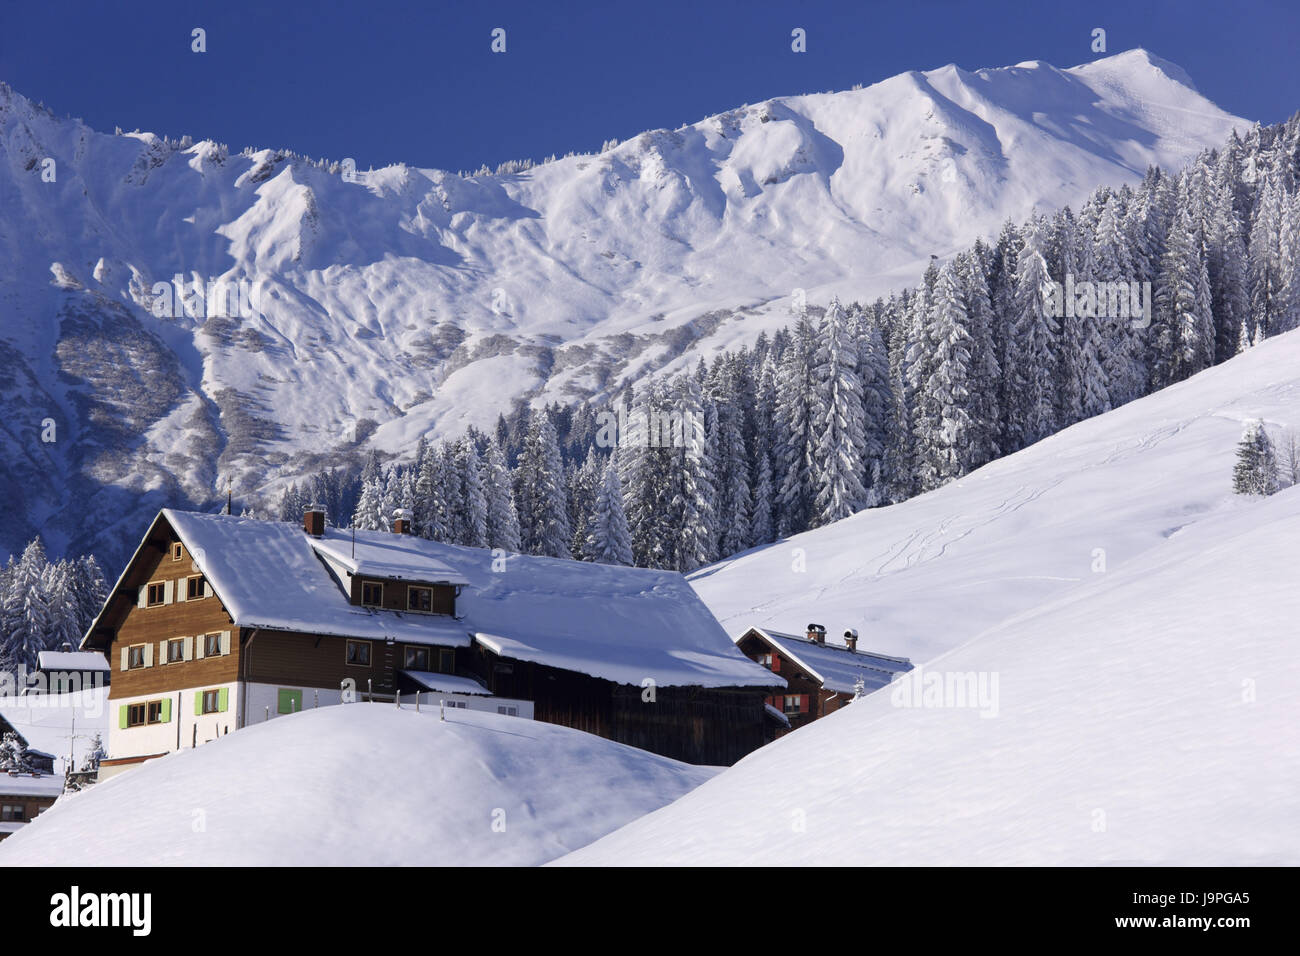 Austria,Vorarlberg,Kleinwalsertal,Baad,Allgäuer alps,residential house,winter, Stock Photo